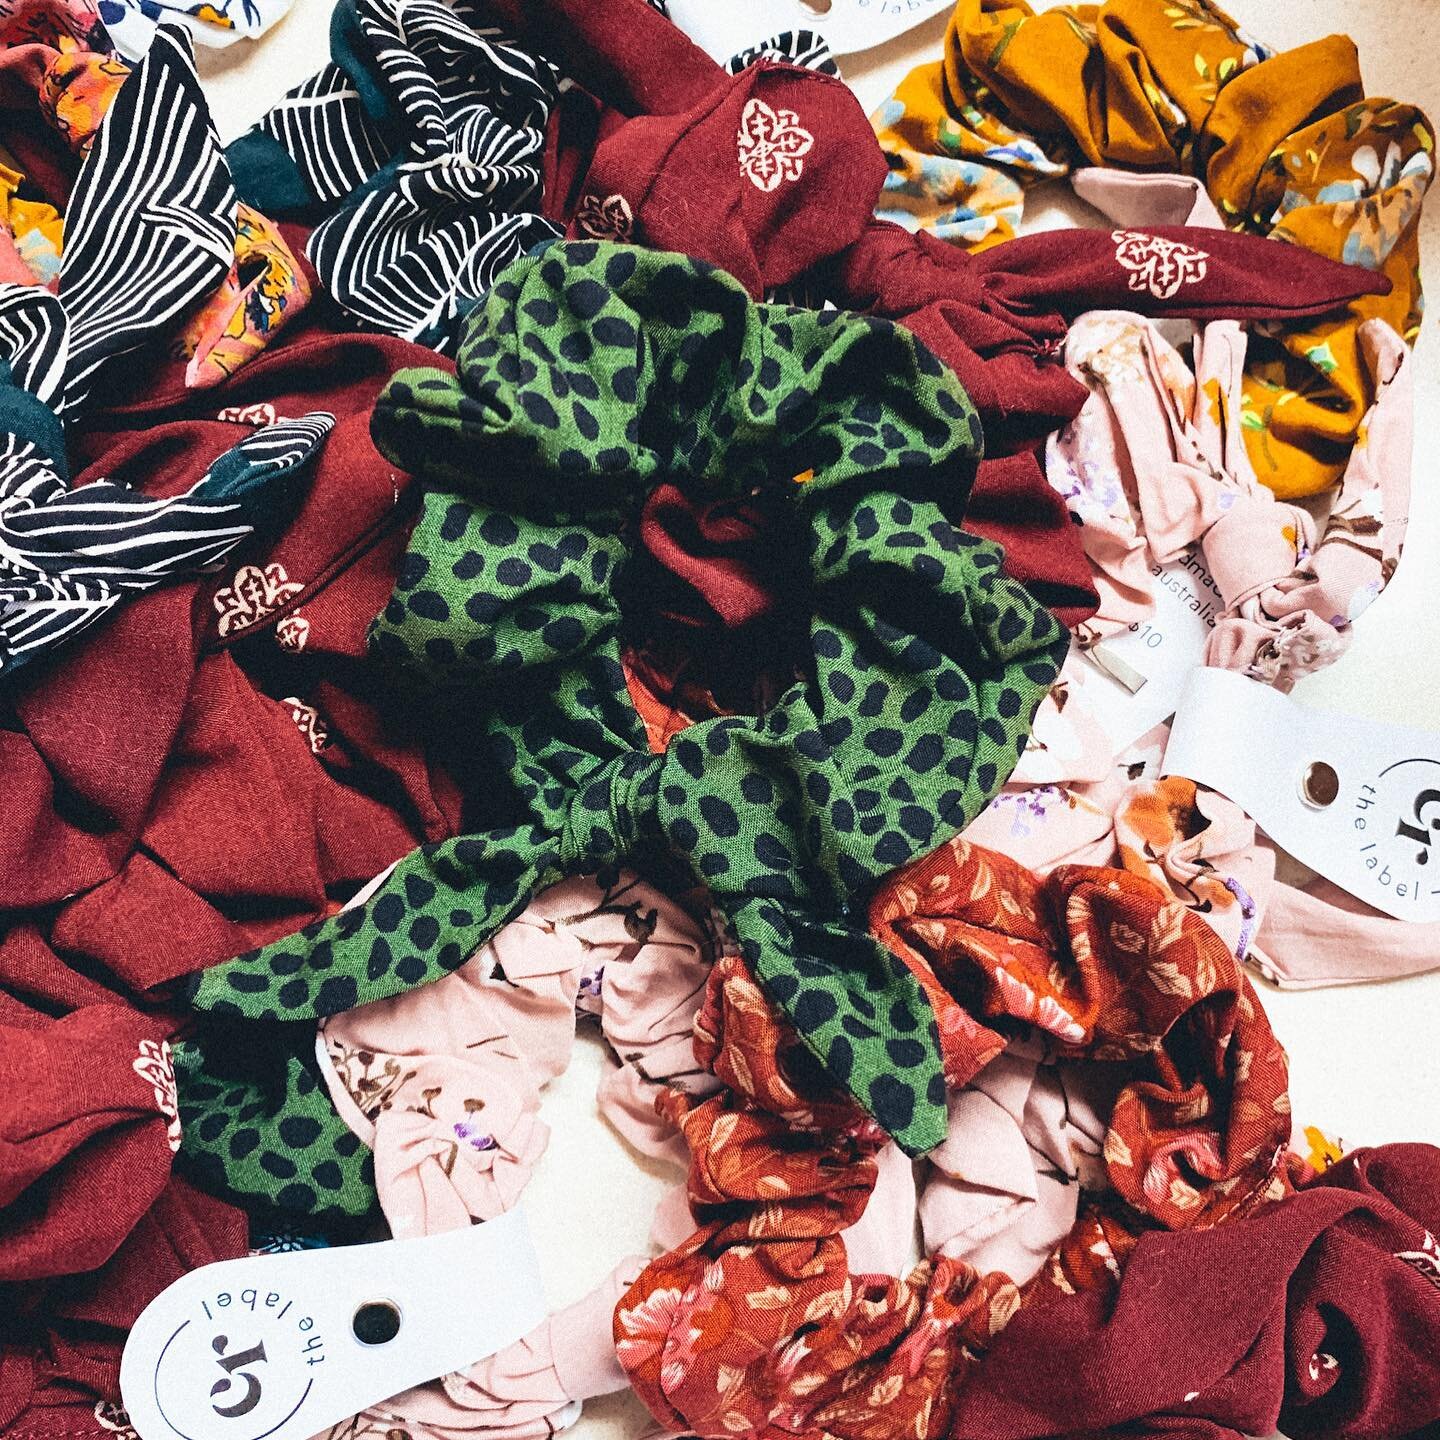 How many scrunchies is too many? 
(Coming soon to the shop!)

#bowscrunchies #tiescrunchies #leopardprintscunchie #cheetahprintscrunchie